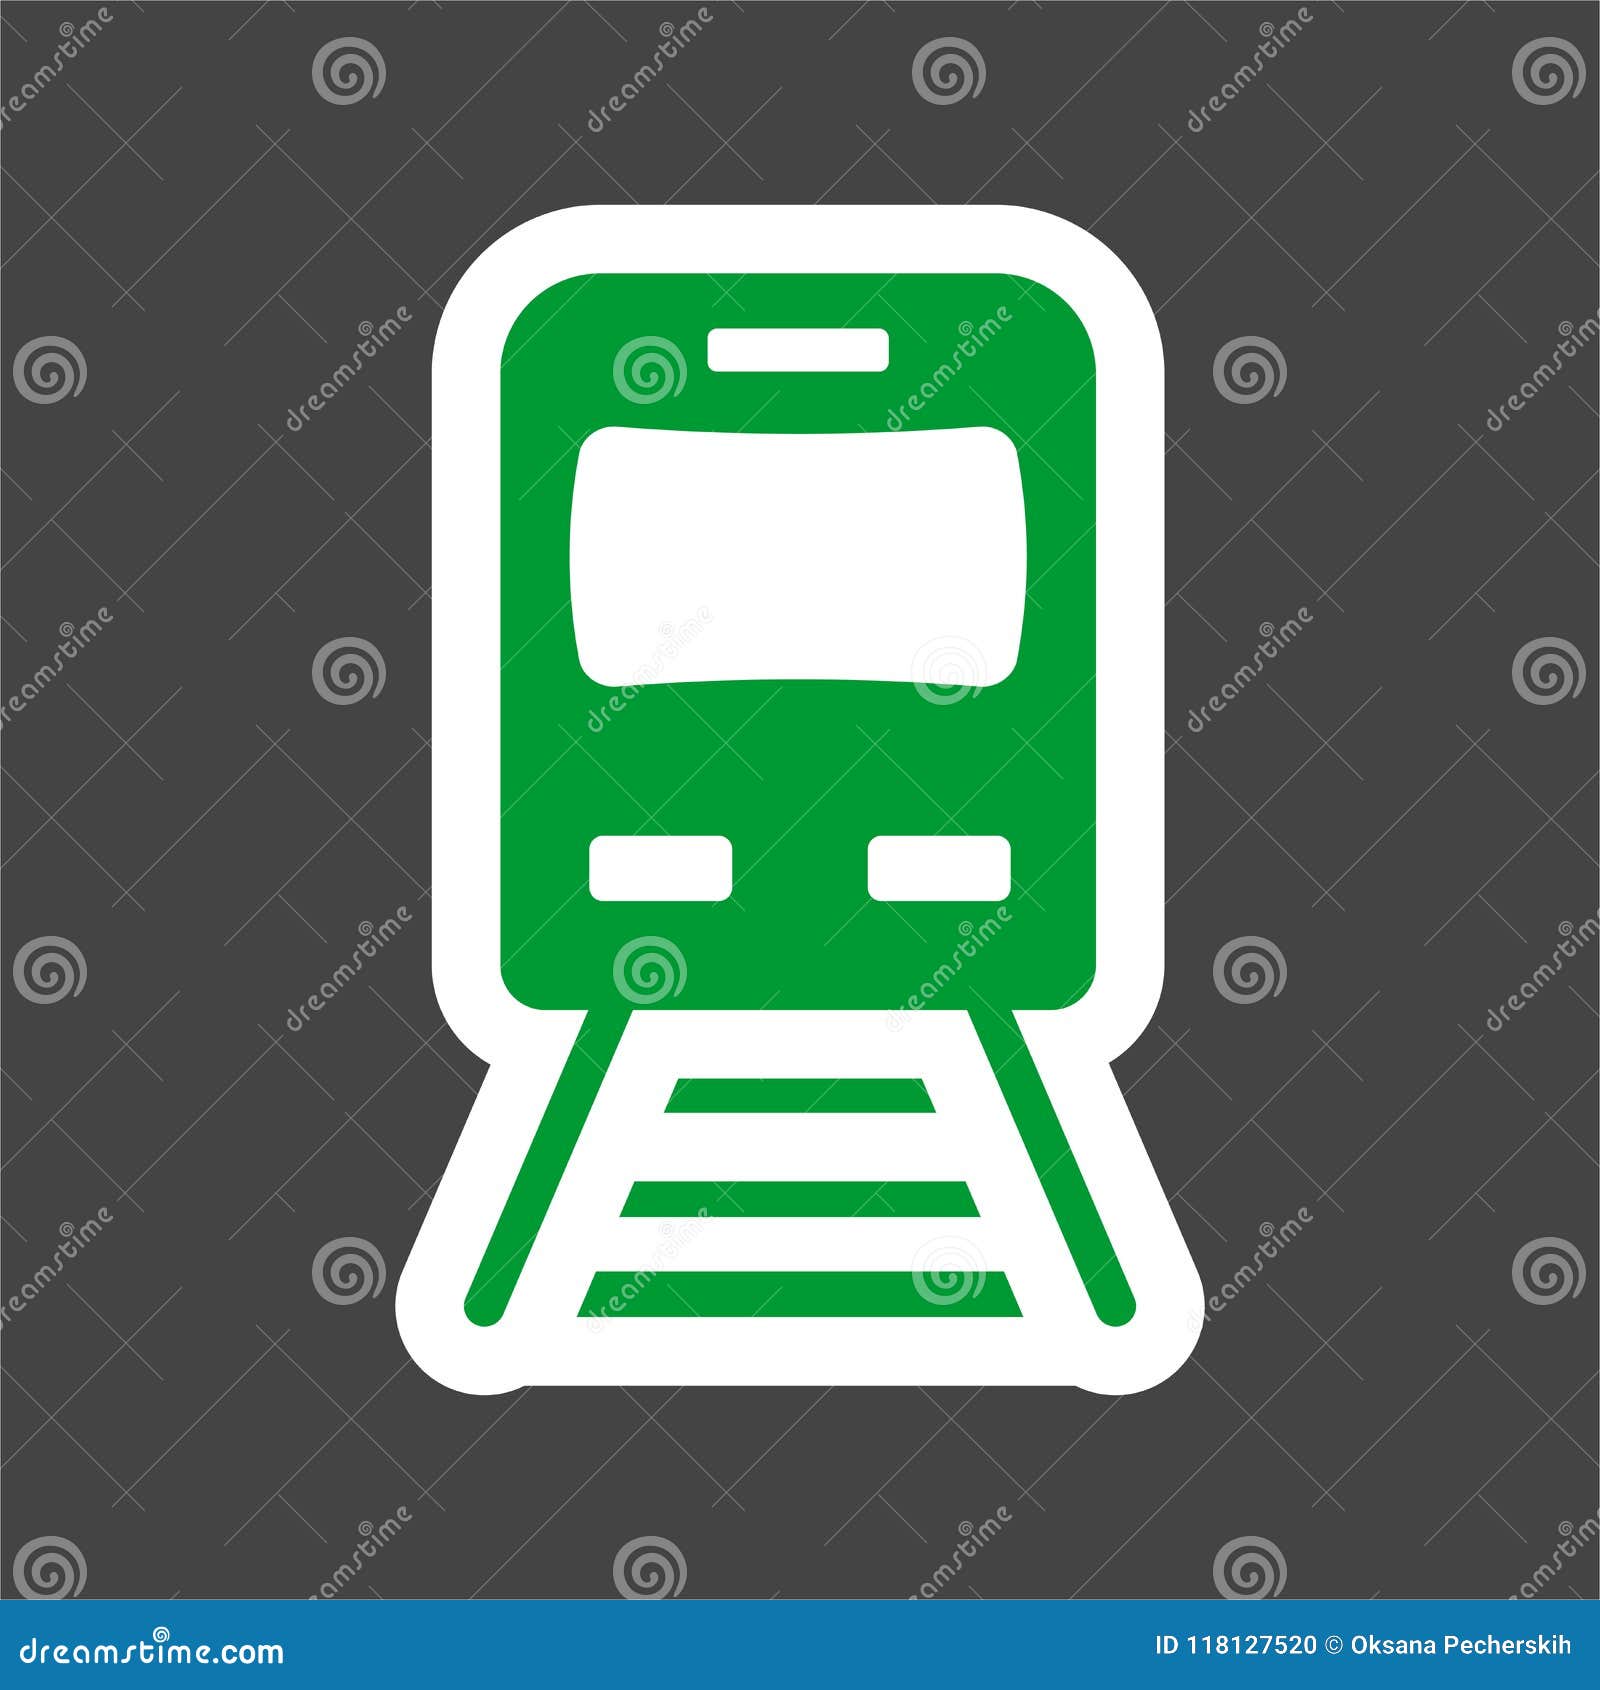 Vector Colored Sticker Subway Icon. Illustration of Metro Icon Stock Vector  - Illustration of shape, sign: 118127520